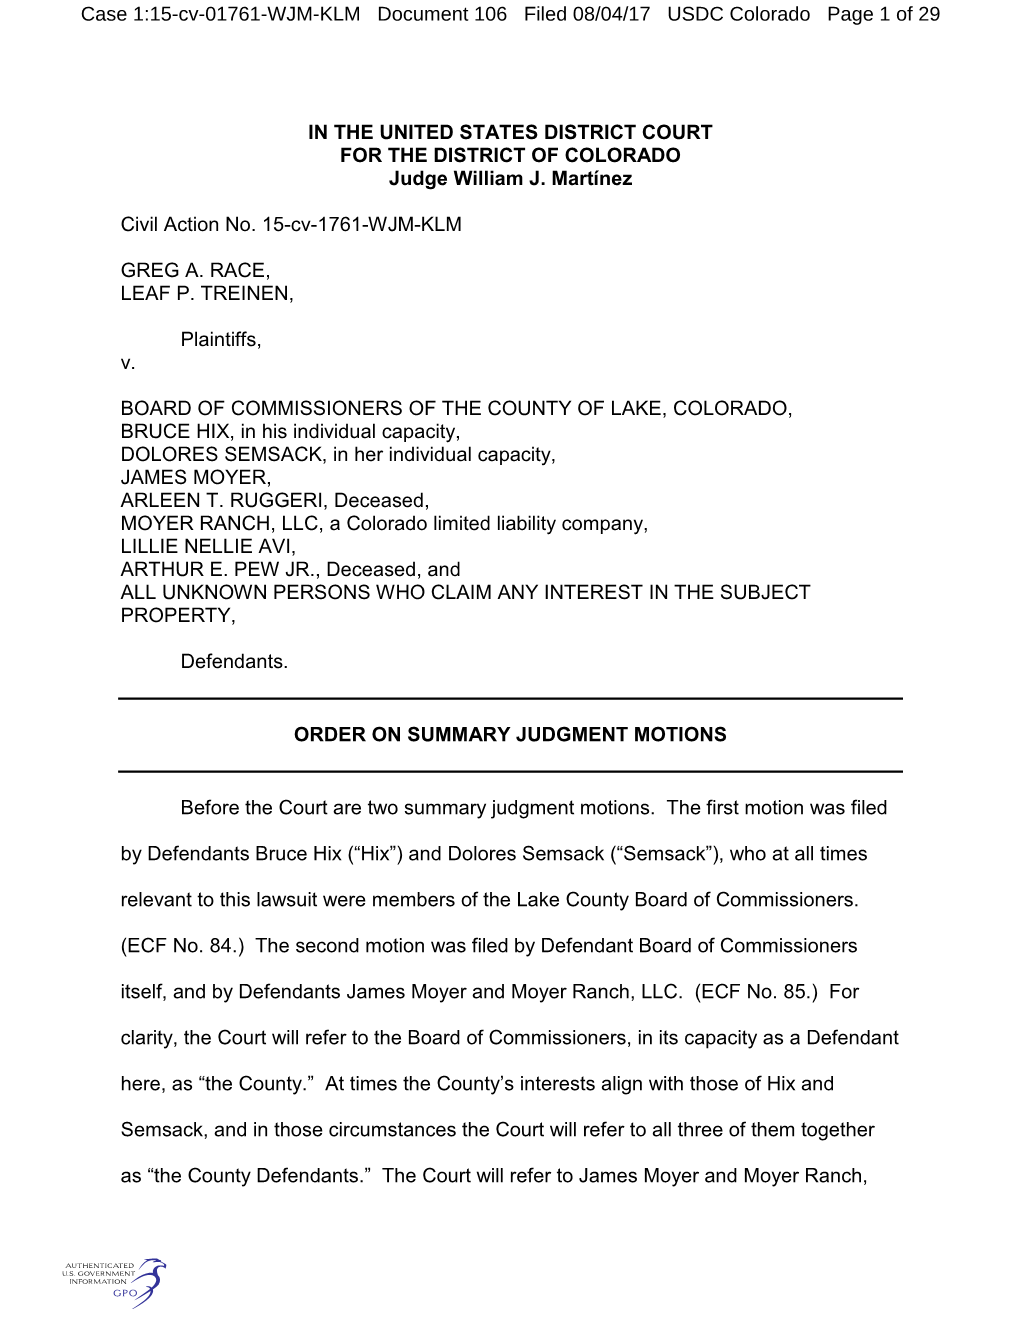 Case 1:15-Cv-01761-WJM-KLM Document 106 Filed 08/04/17 USDC Colorado Page 1 of 29